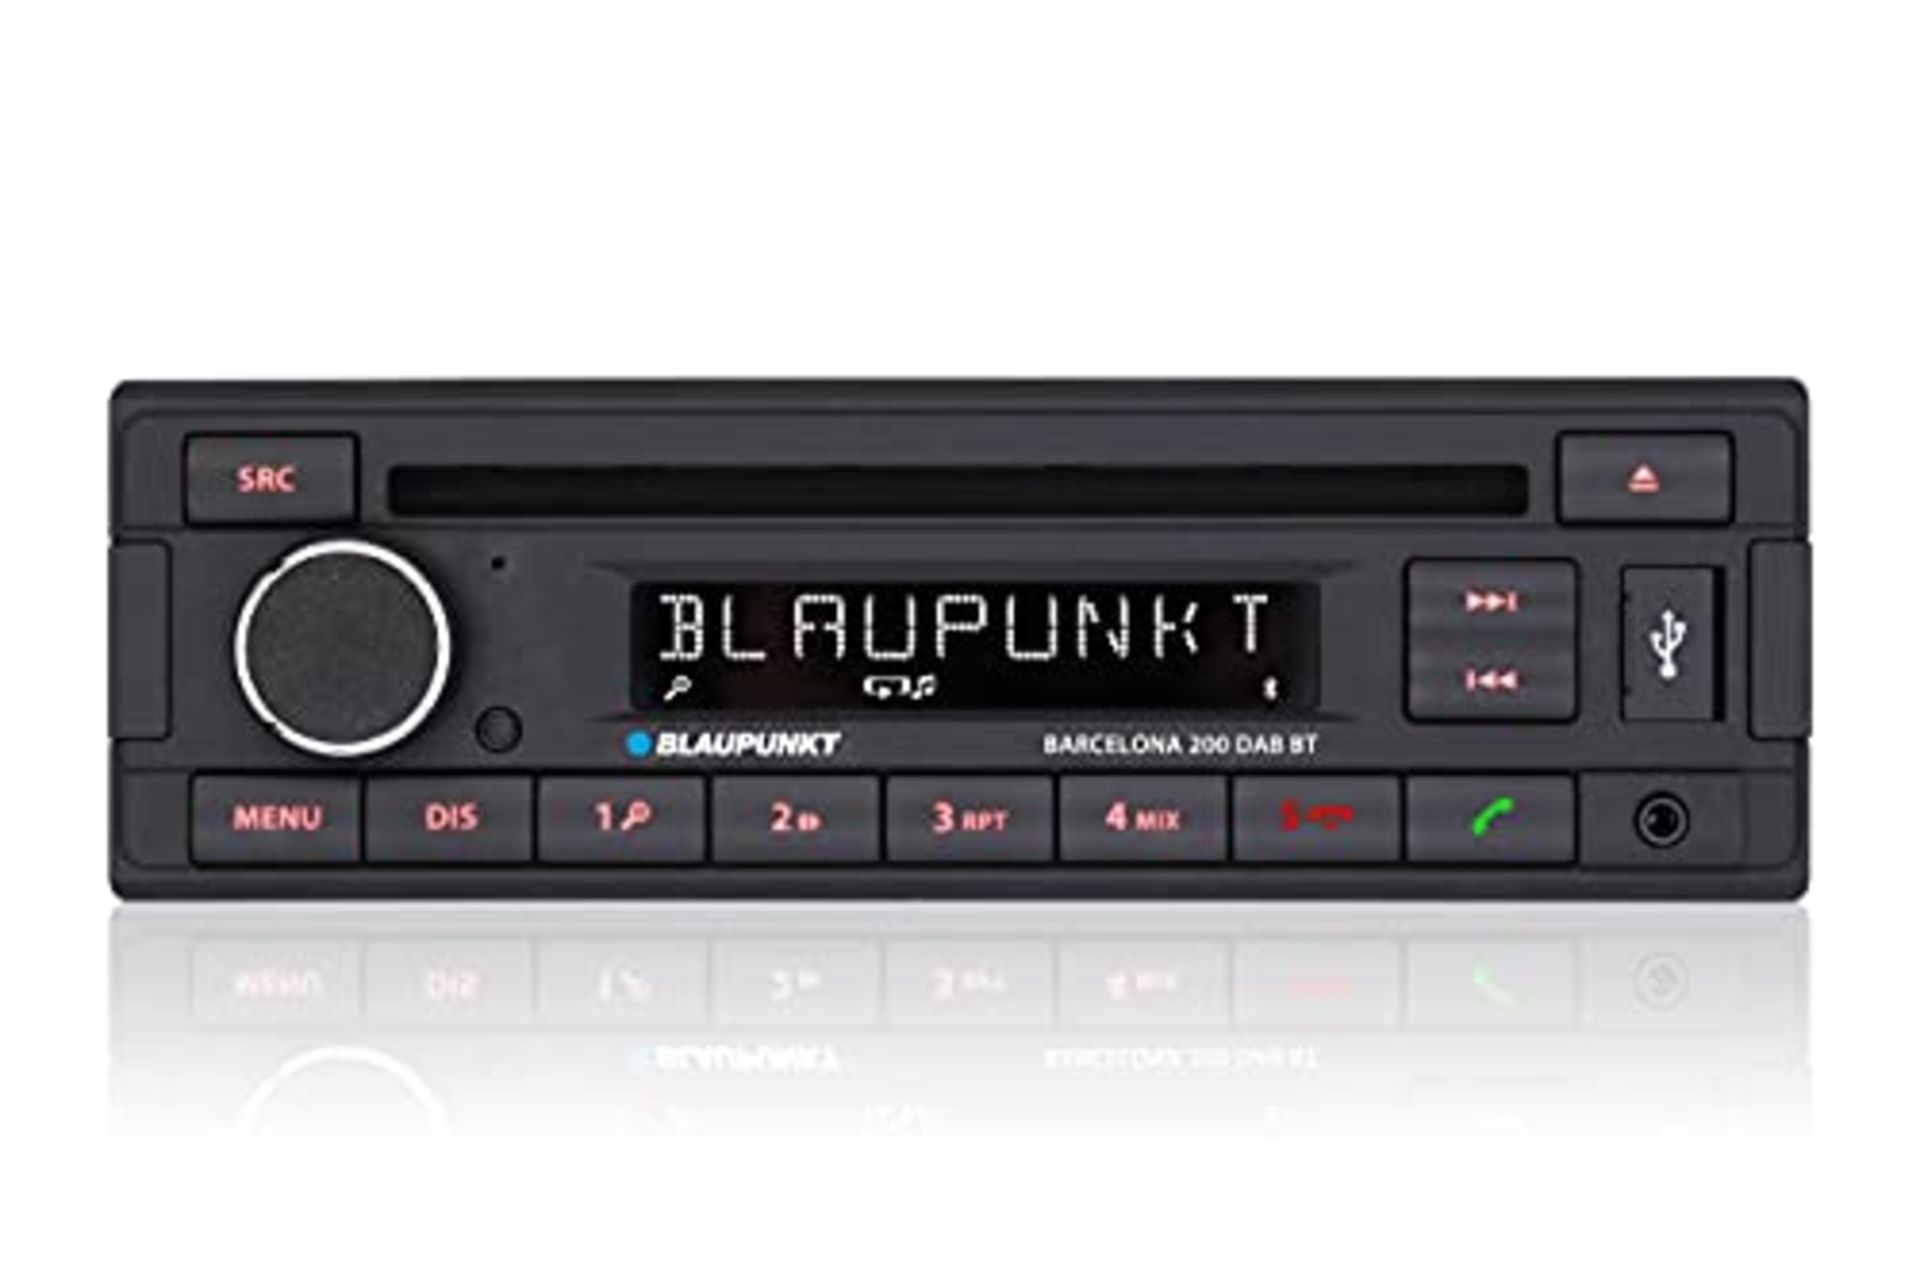 RRP £141.00 Blaupunkt Barcelona 200 DAB BT Car Radio with Bluetooth Hands-Free Calling, DAB+ Tuner